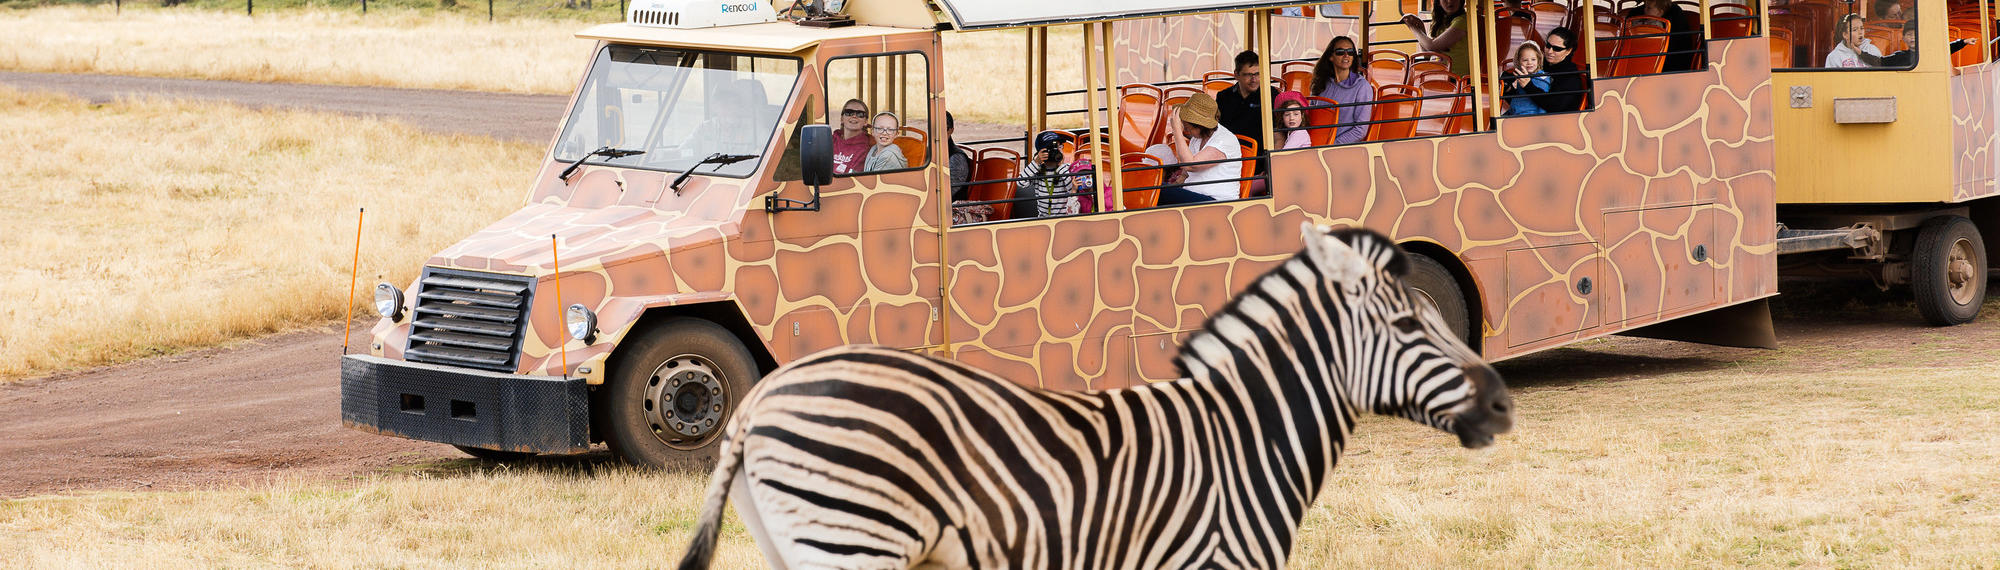 Visitors on a safari bus looking at a zebra on the Savannah at Werribee Open Range Zoo.